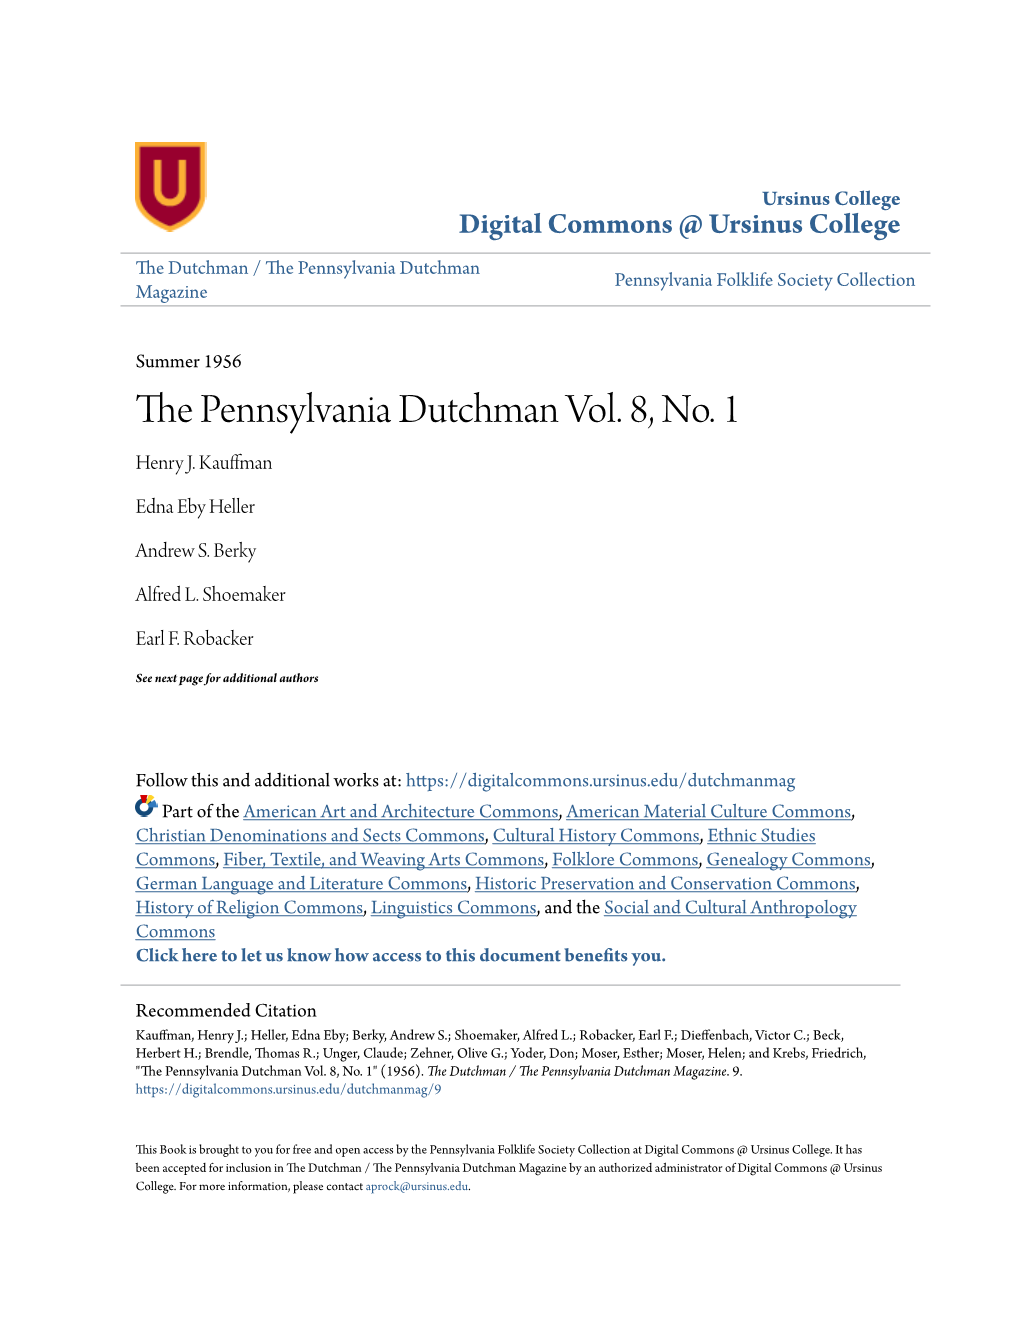 The Pennsylvania Dutchman Vol. 8, No. 1